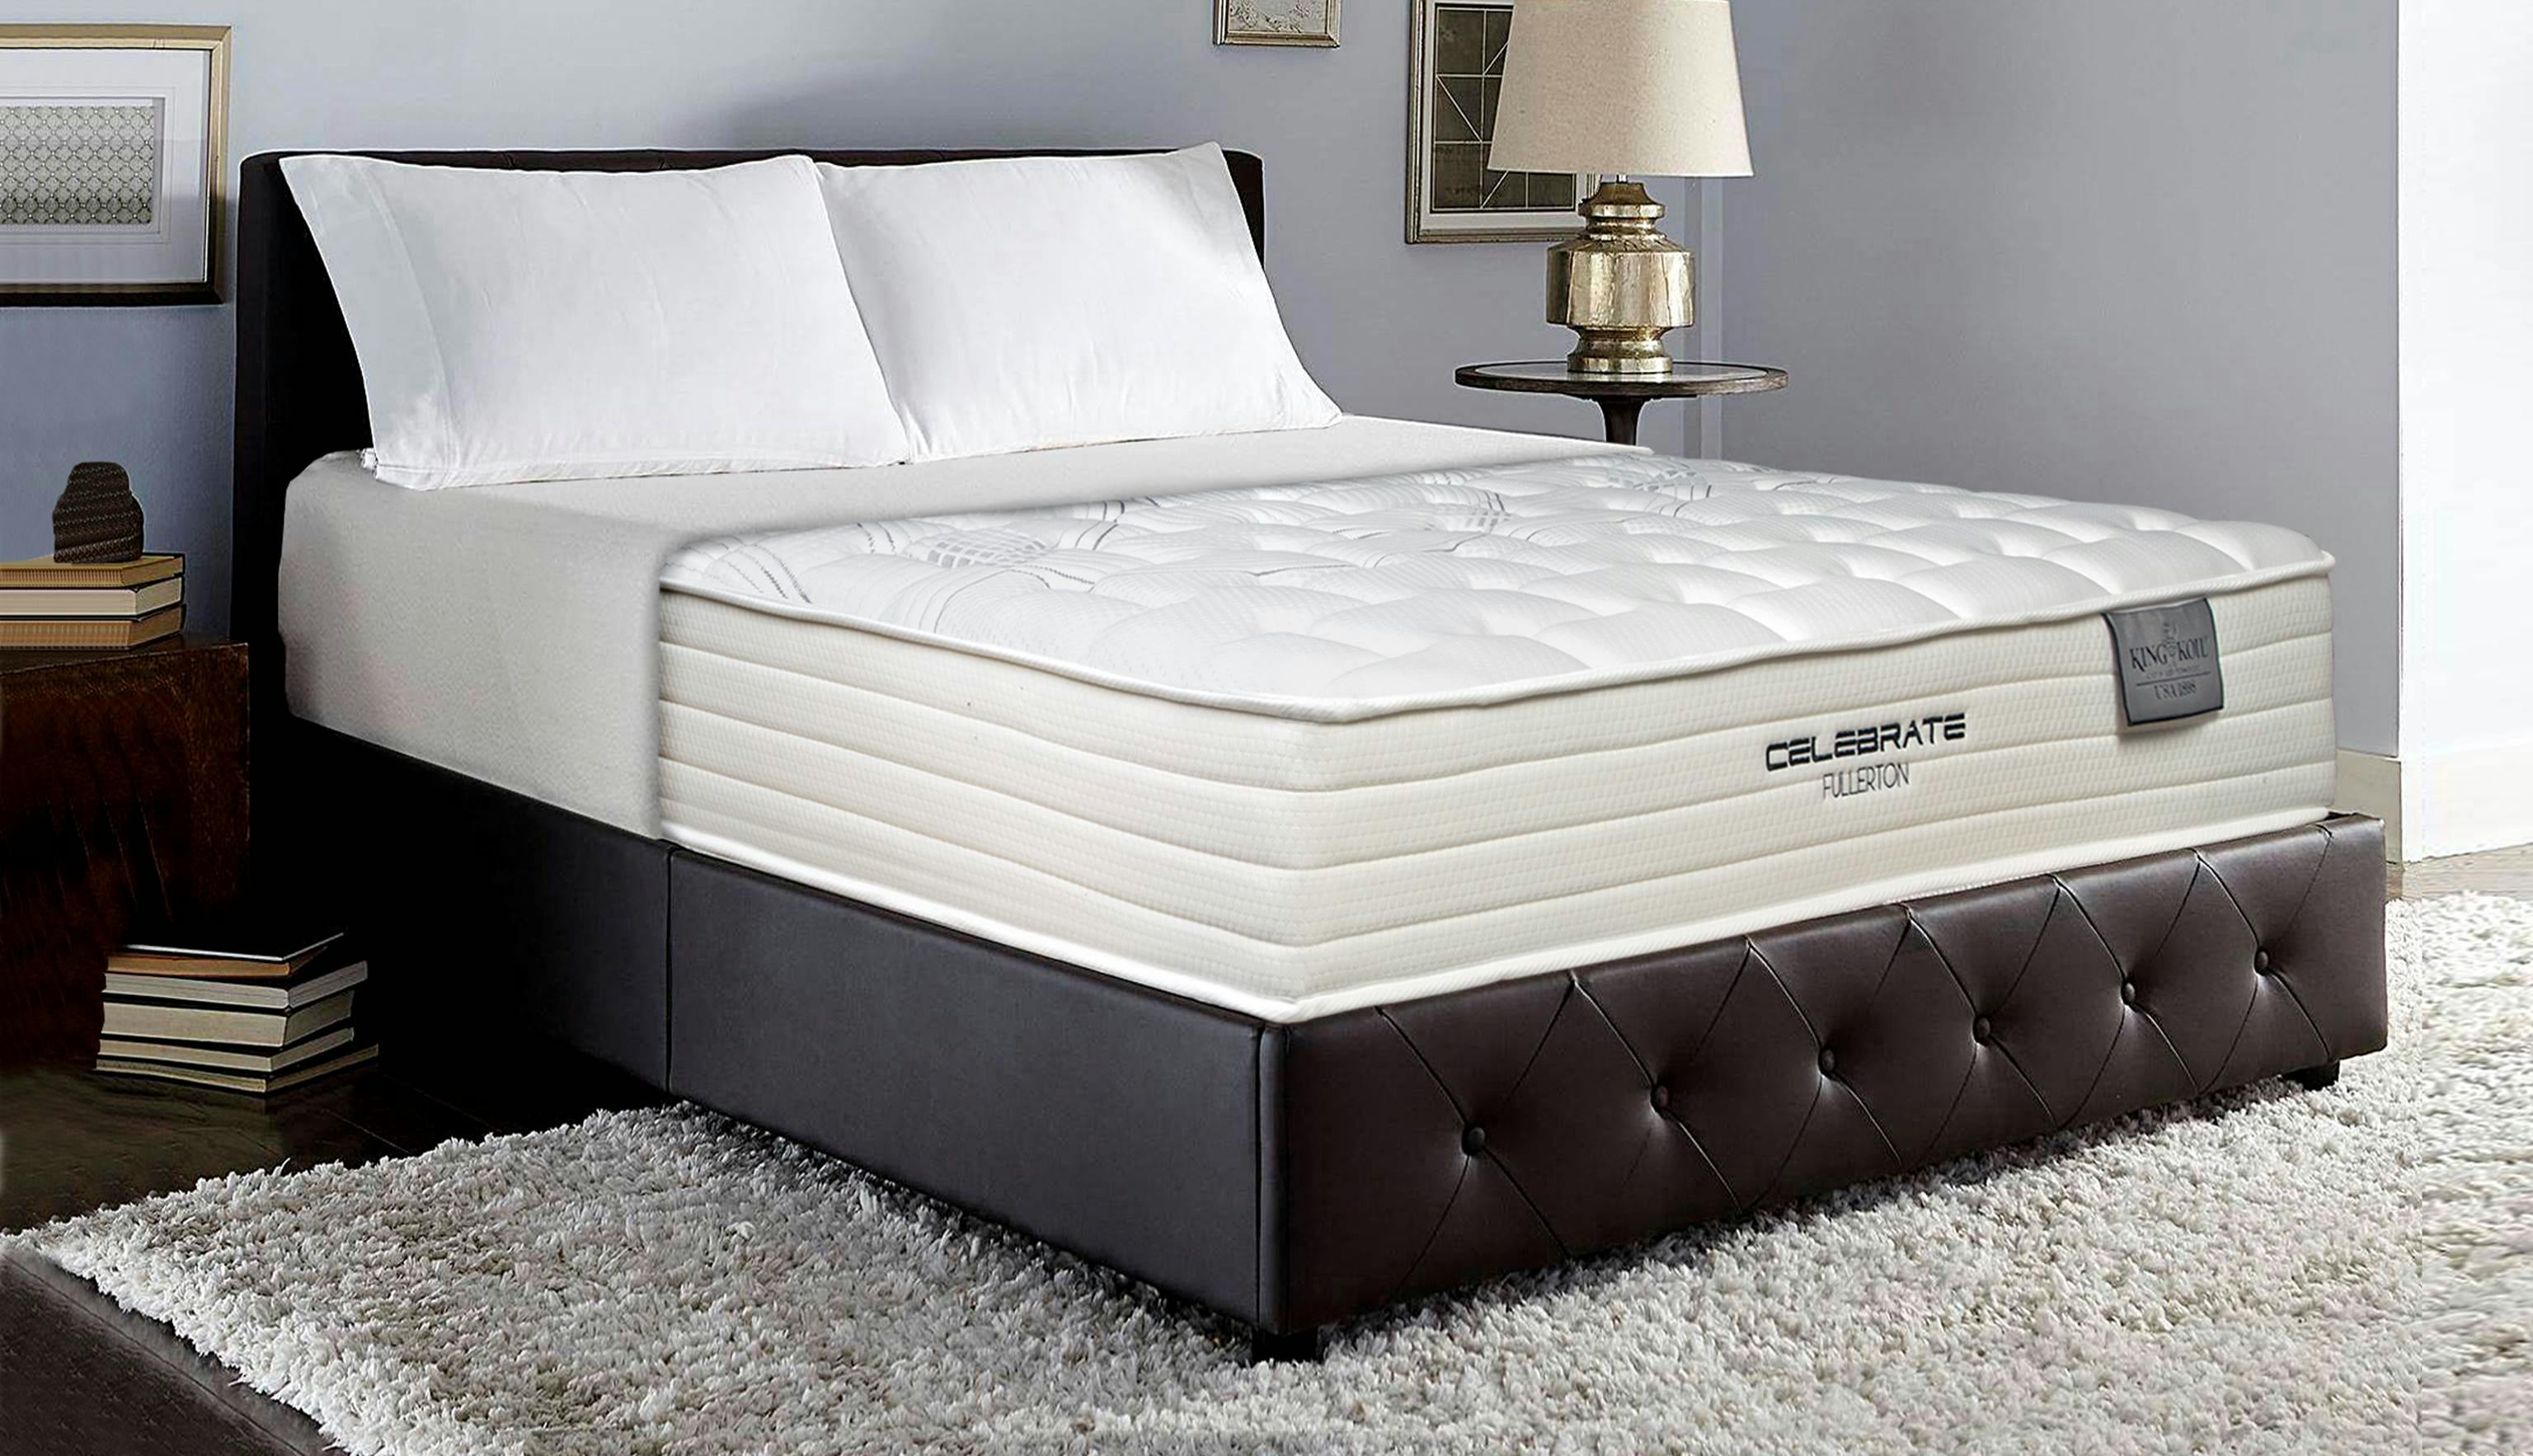 king koil brighton mattress